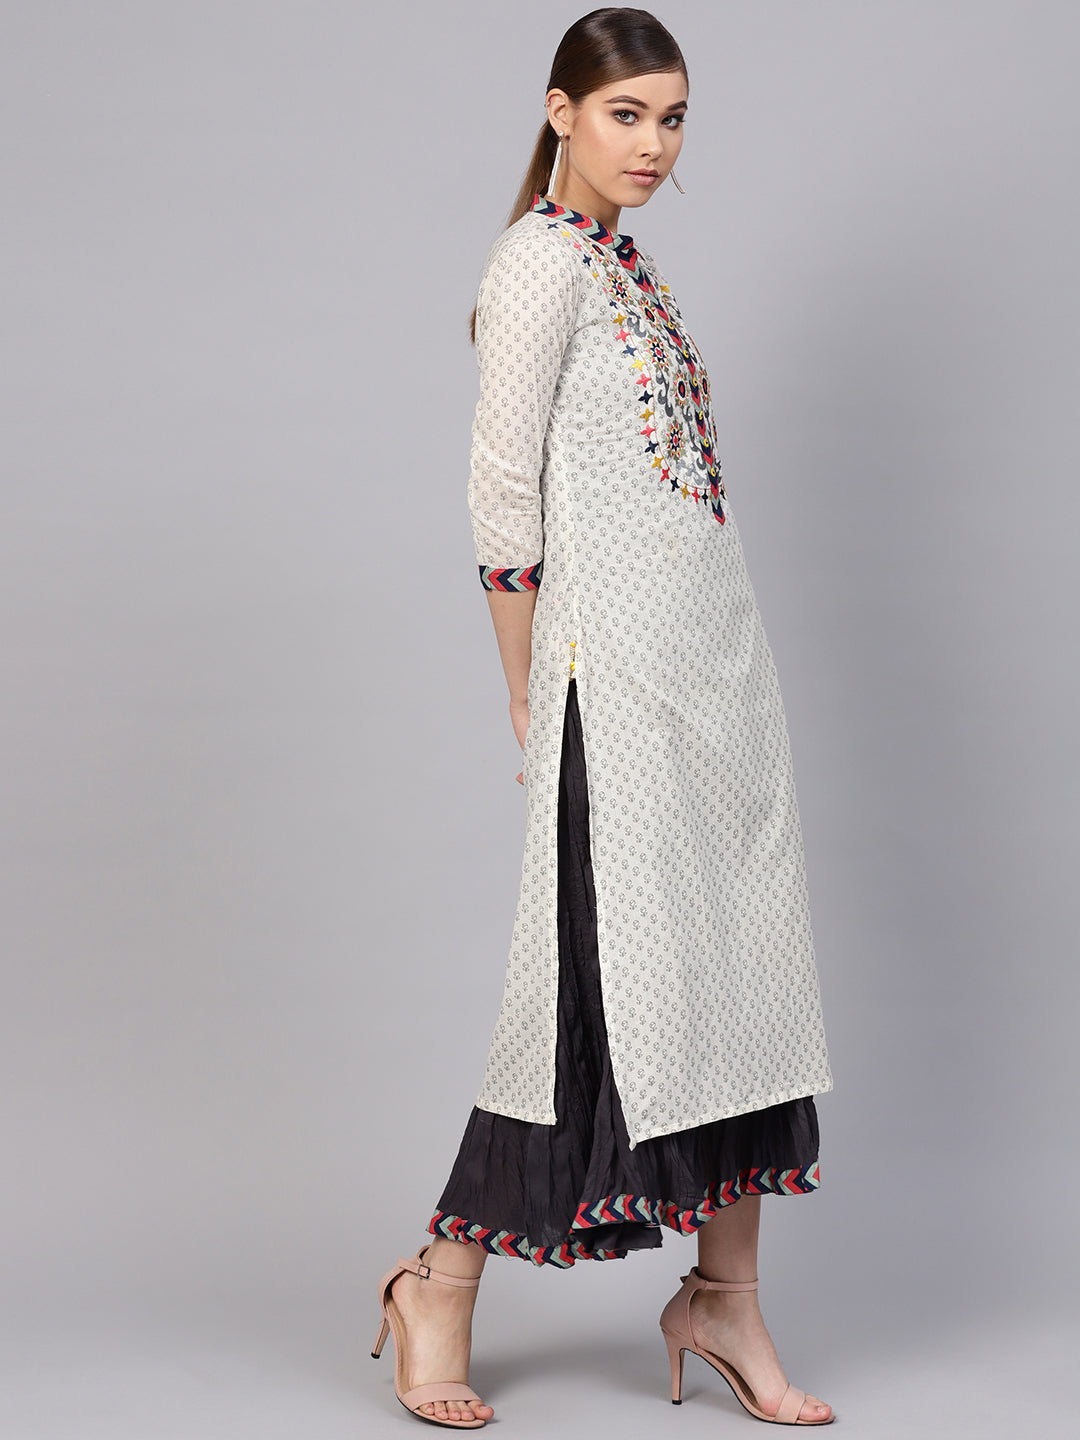 Ishin Women's Cotton White & Grey Embroidered Anarkali Dress